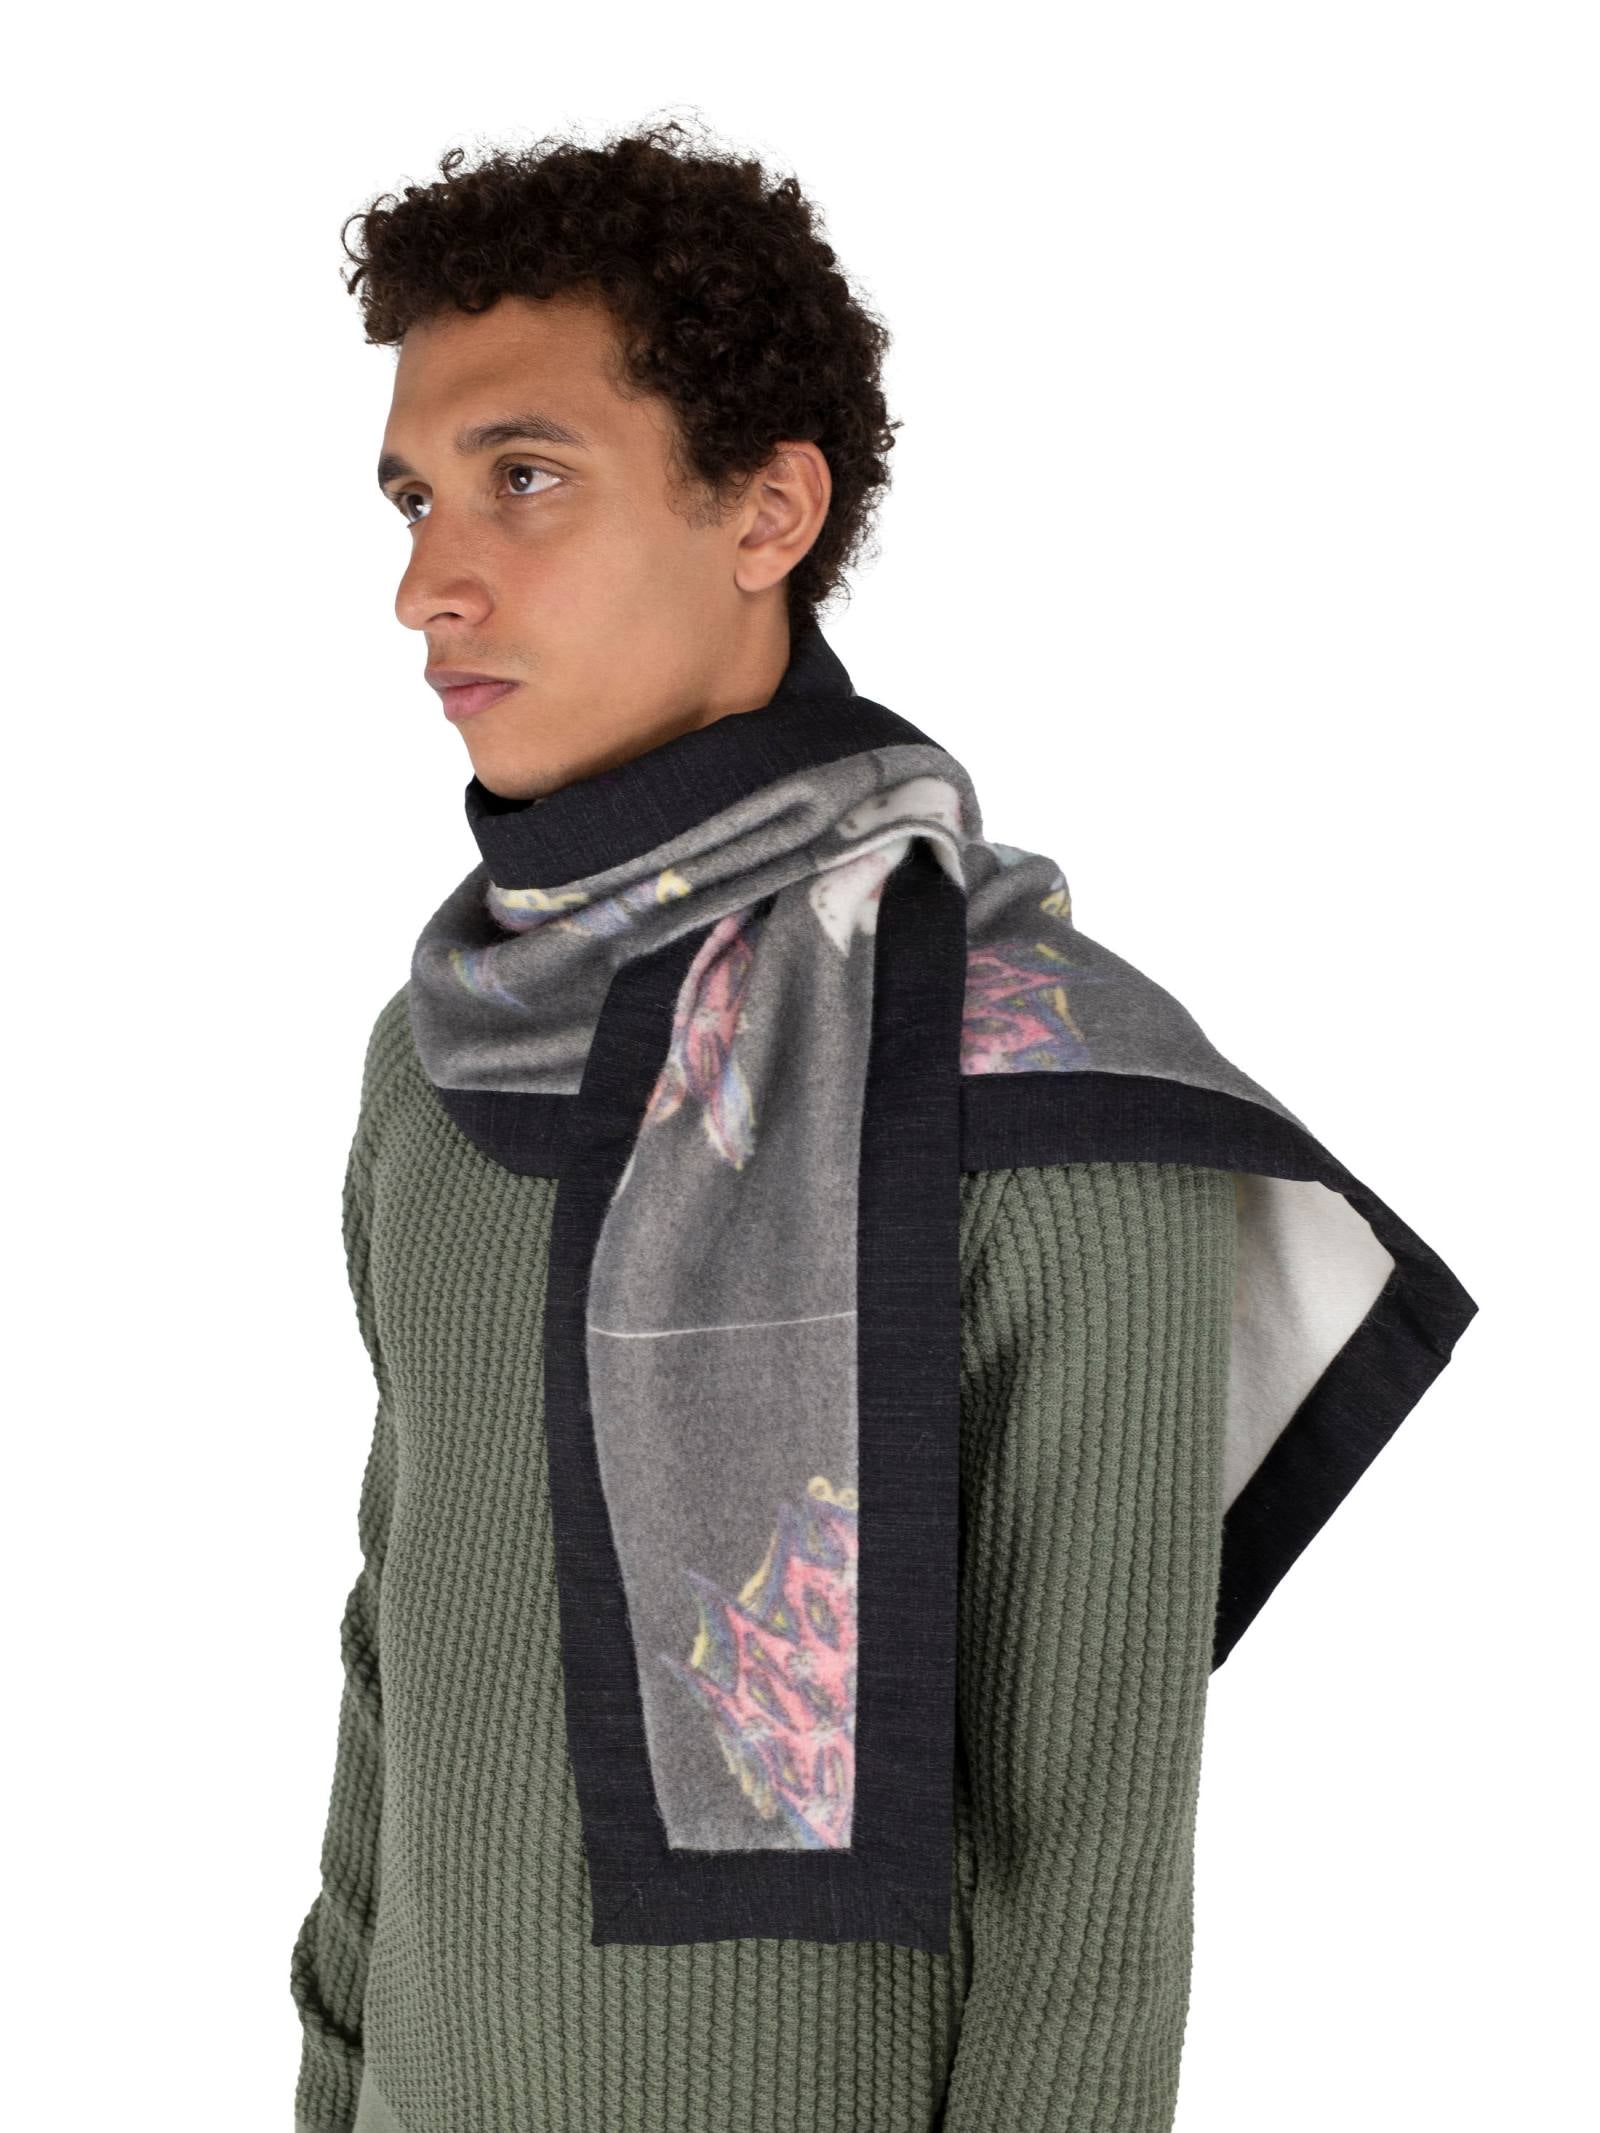 vuitton scarf mens